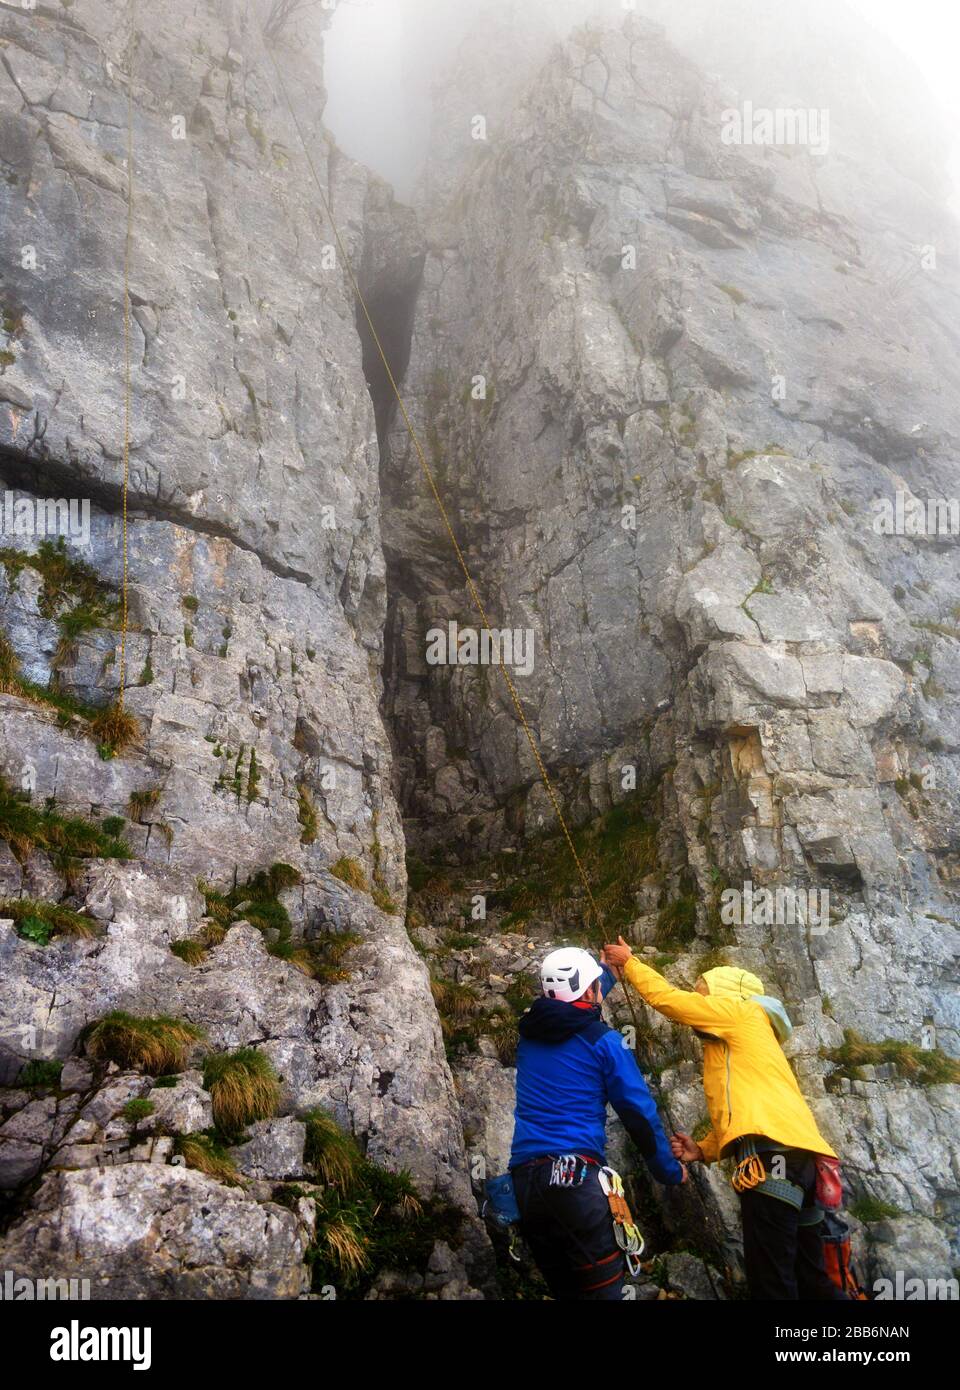 Man and woman mountain climbing in the fog, Ebenalp, Switzerland Stock Photo